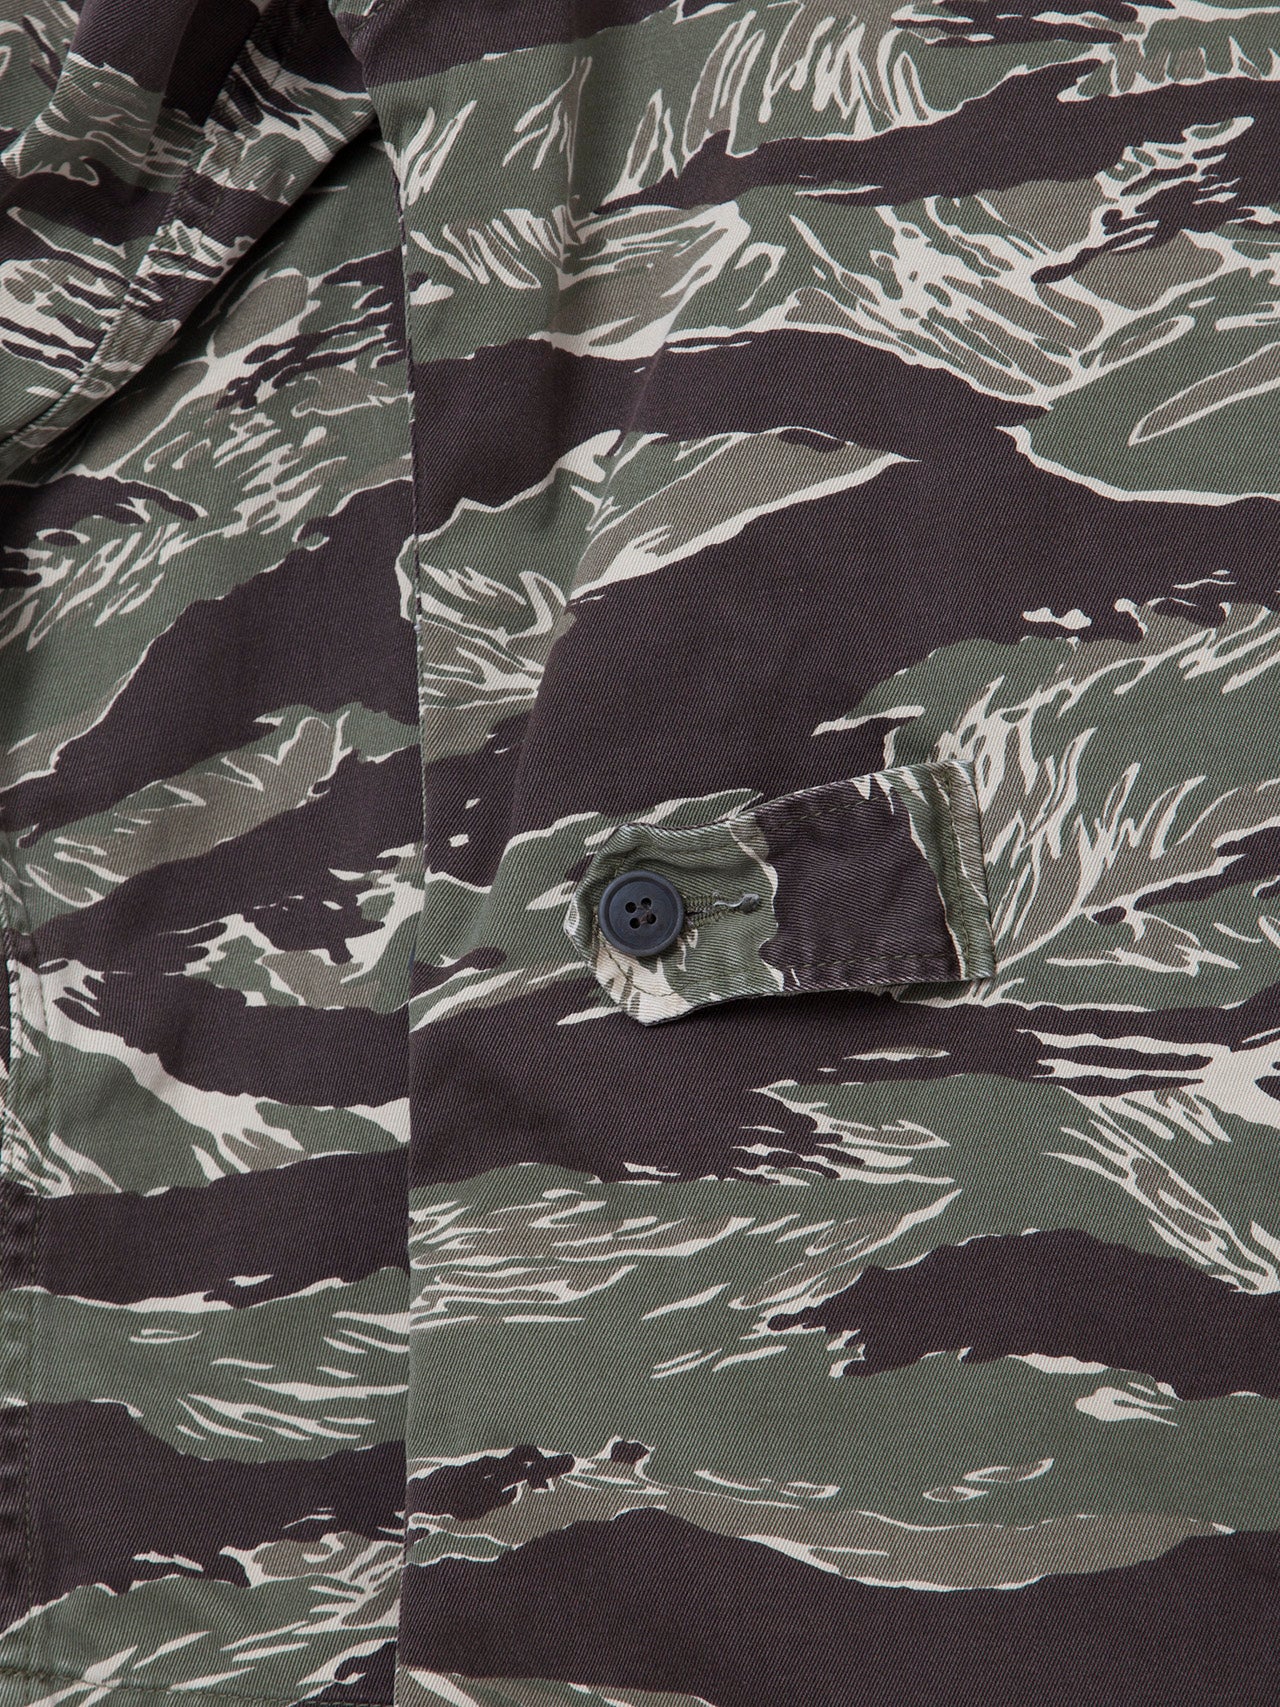 THE CORONA UTILITY・B.D.U Jacket / Tiger Stripe・Combat Fatigue Pattern Twill w/Special Bio Wash